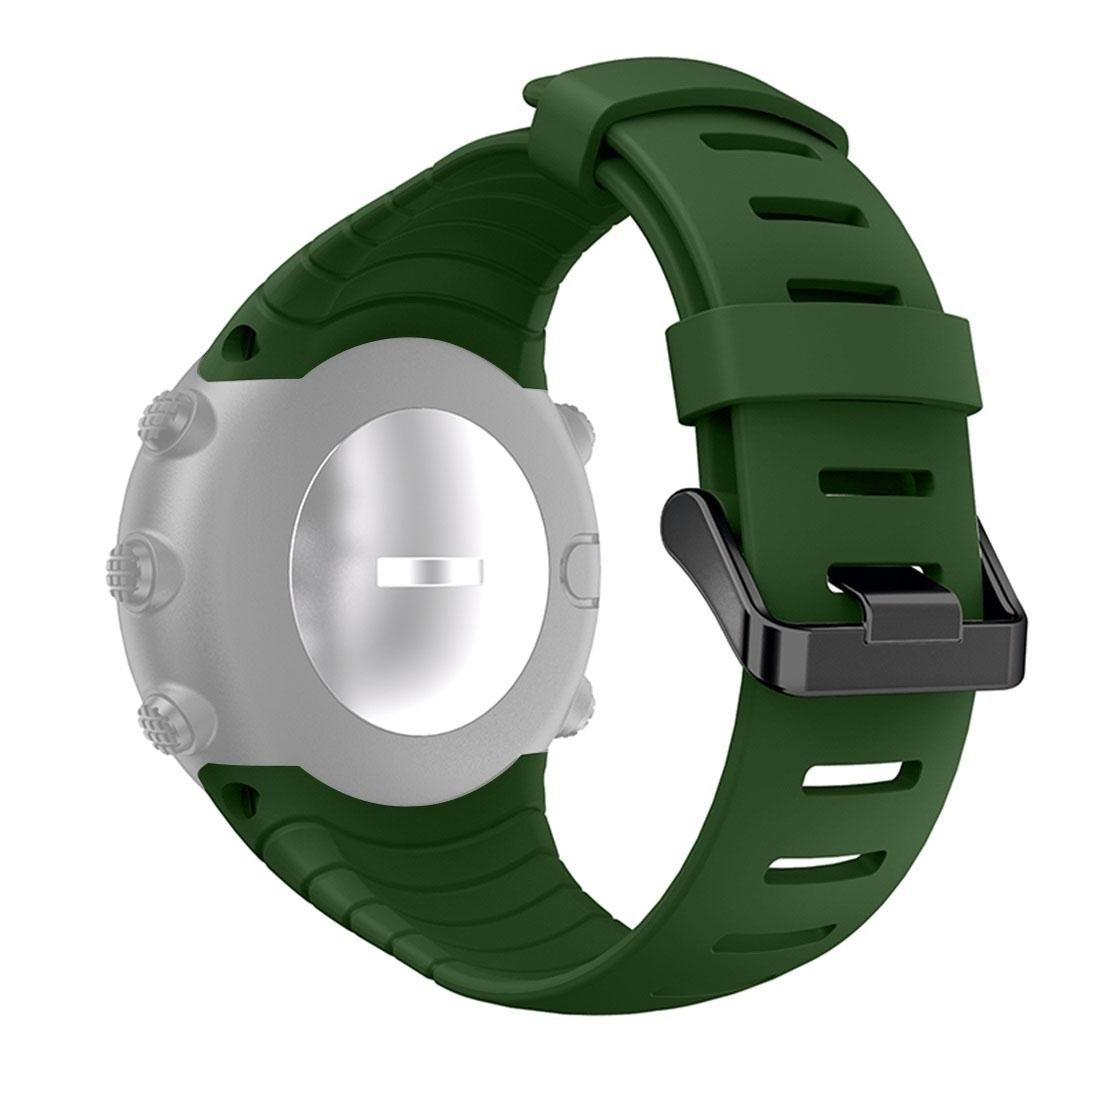 Smart Watch Silicone Wrist Strap Watchband for Suunto Core (Purple)